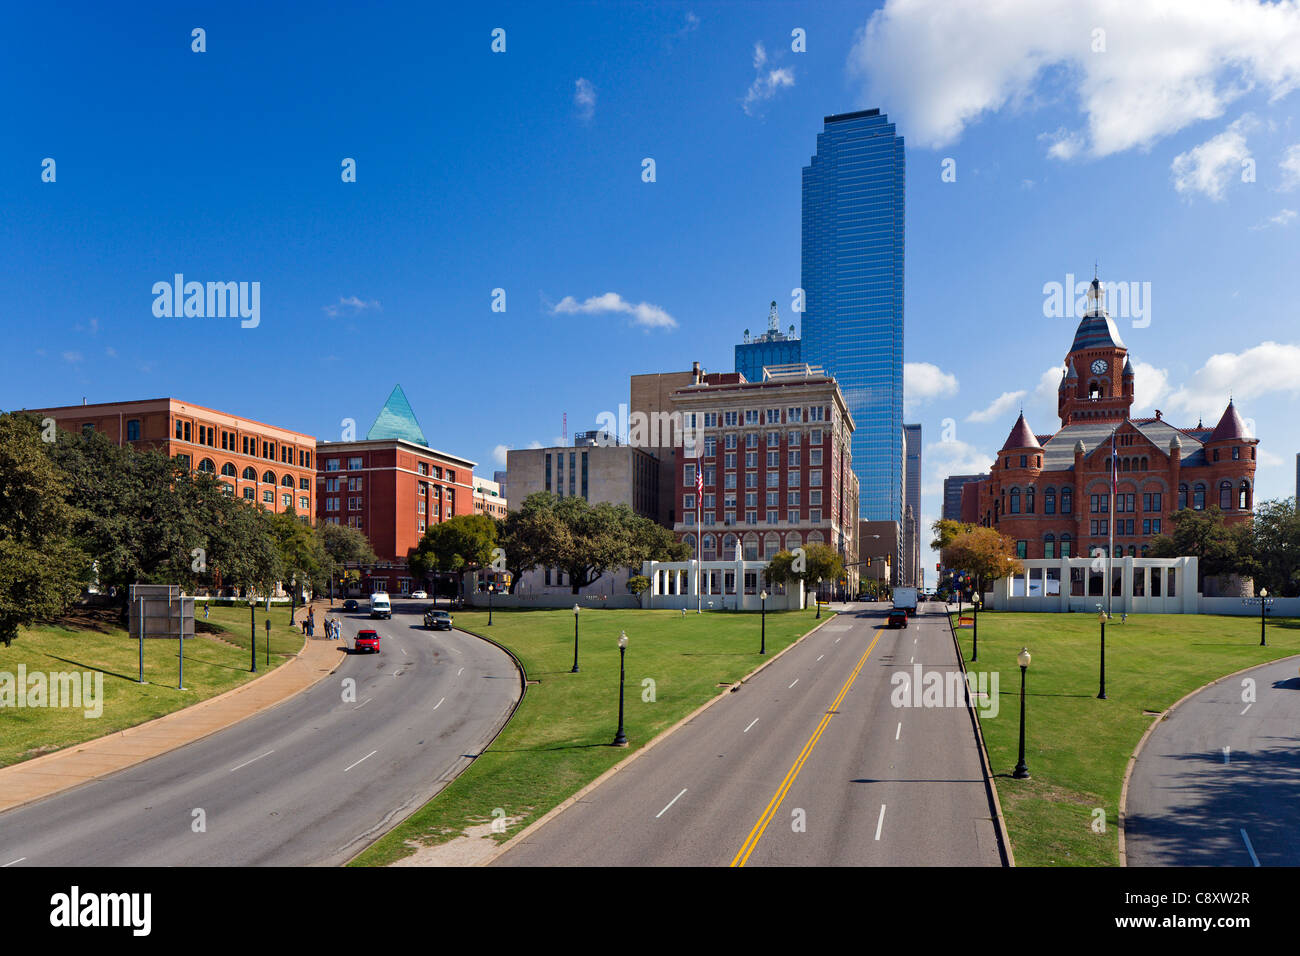 Site de l'assassinat de Kennedy en regardant vers Dealey Plaza avec l'ancien Texas Schoolbook Depository à gauche, Dallas, Texas, USA Banque D'Images